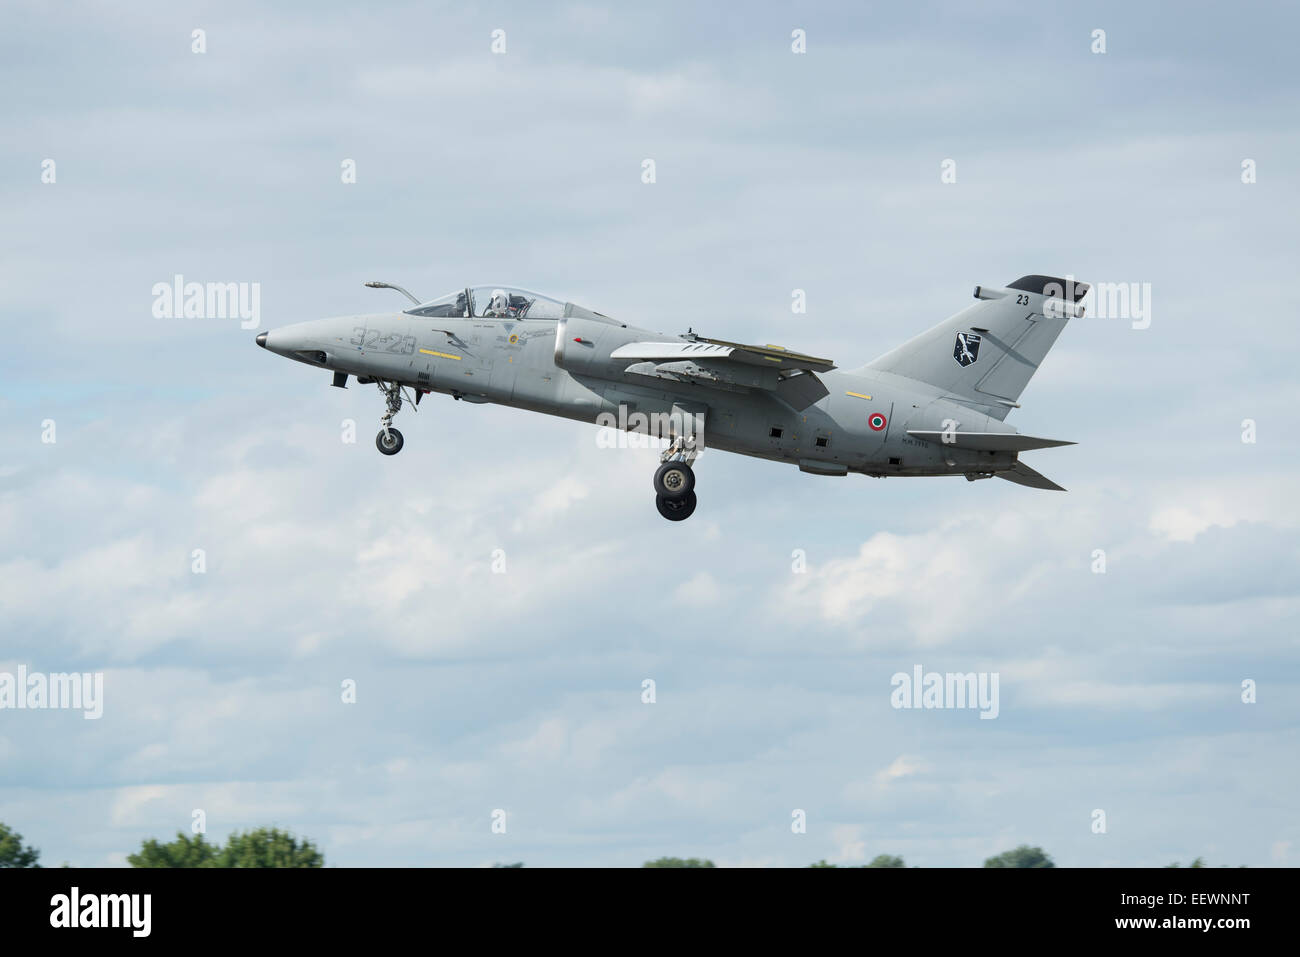 Una Internacional AMX-11 Ghibli ataque terrestre de aviones de combate de la Fuerza Aérea Italiana se muestra en Fairford RIAT Foto de stock